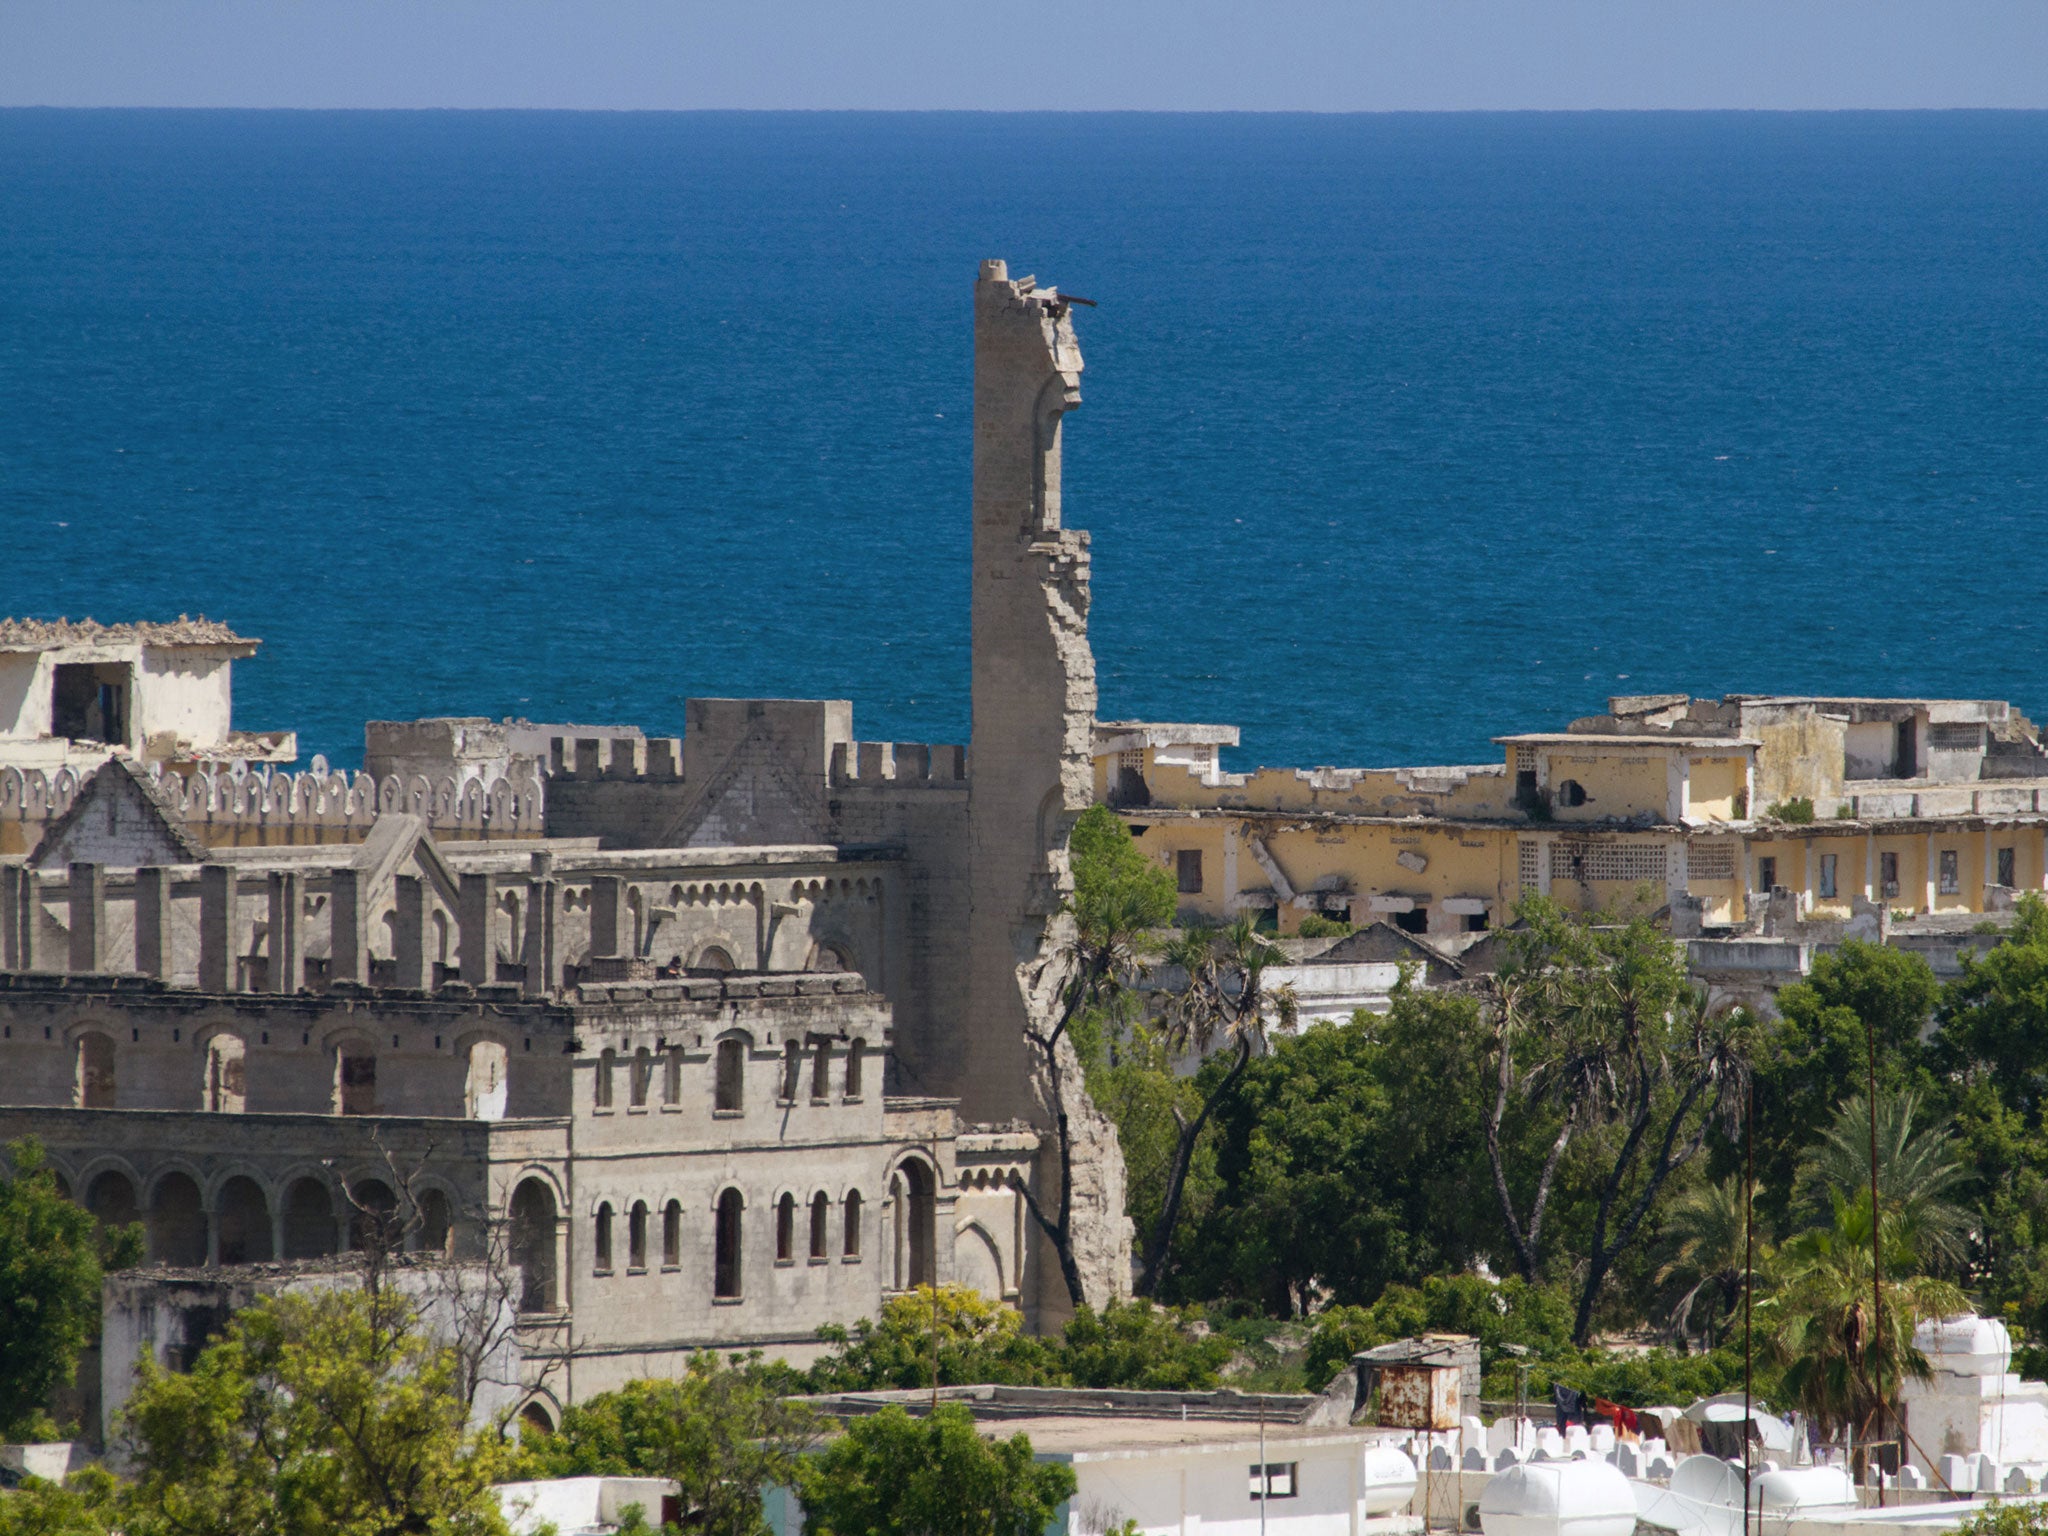 Mogadishu Hotel Attack 14 Dead As Building In Somali